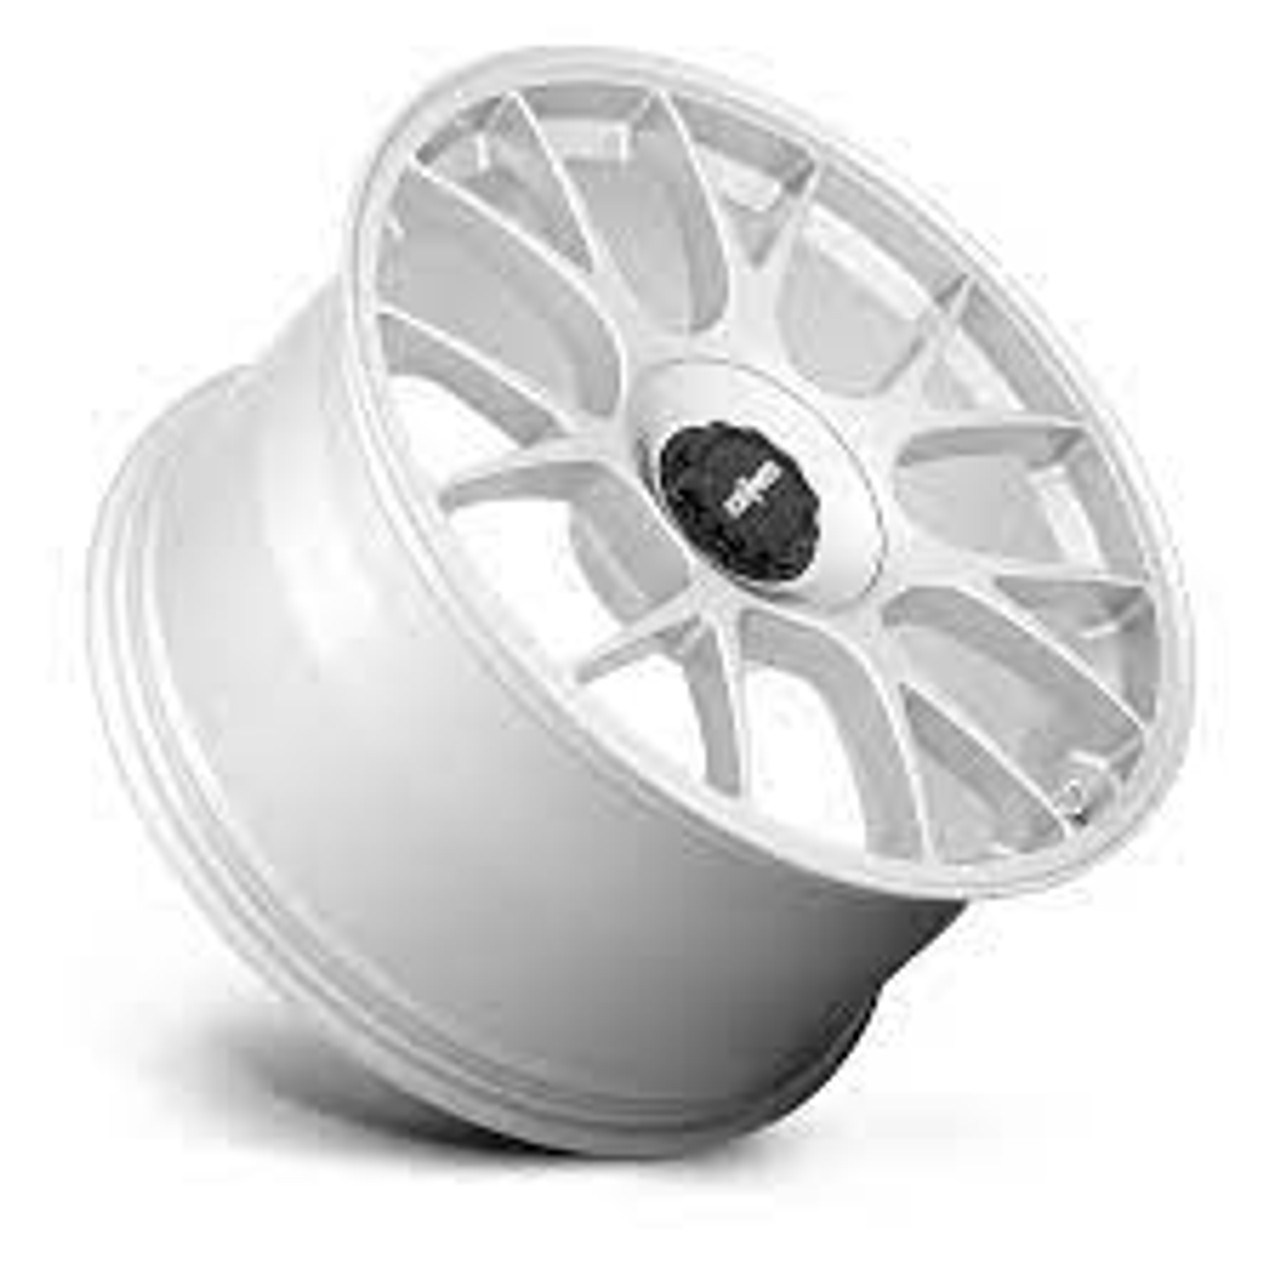 Rotiform R902 TUF Wheel 21x9.5 5x112 30 Offset - Gloss Silver